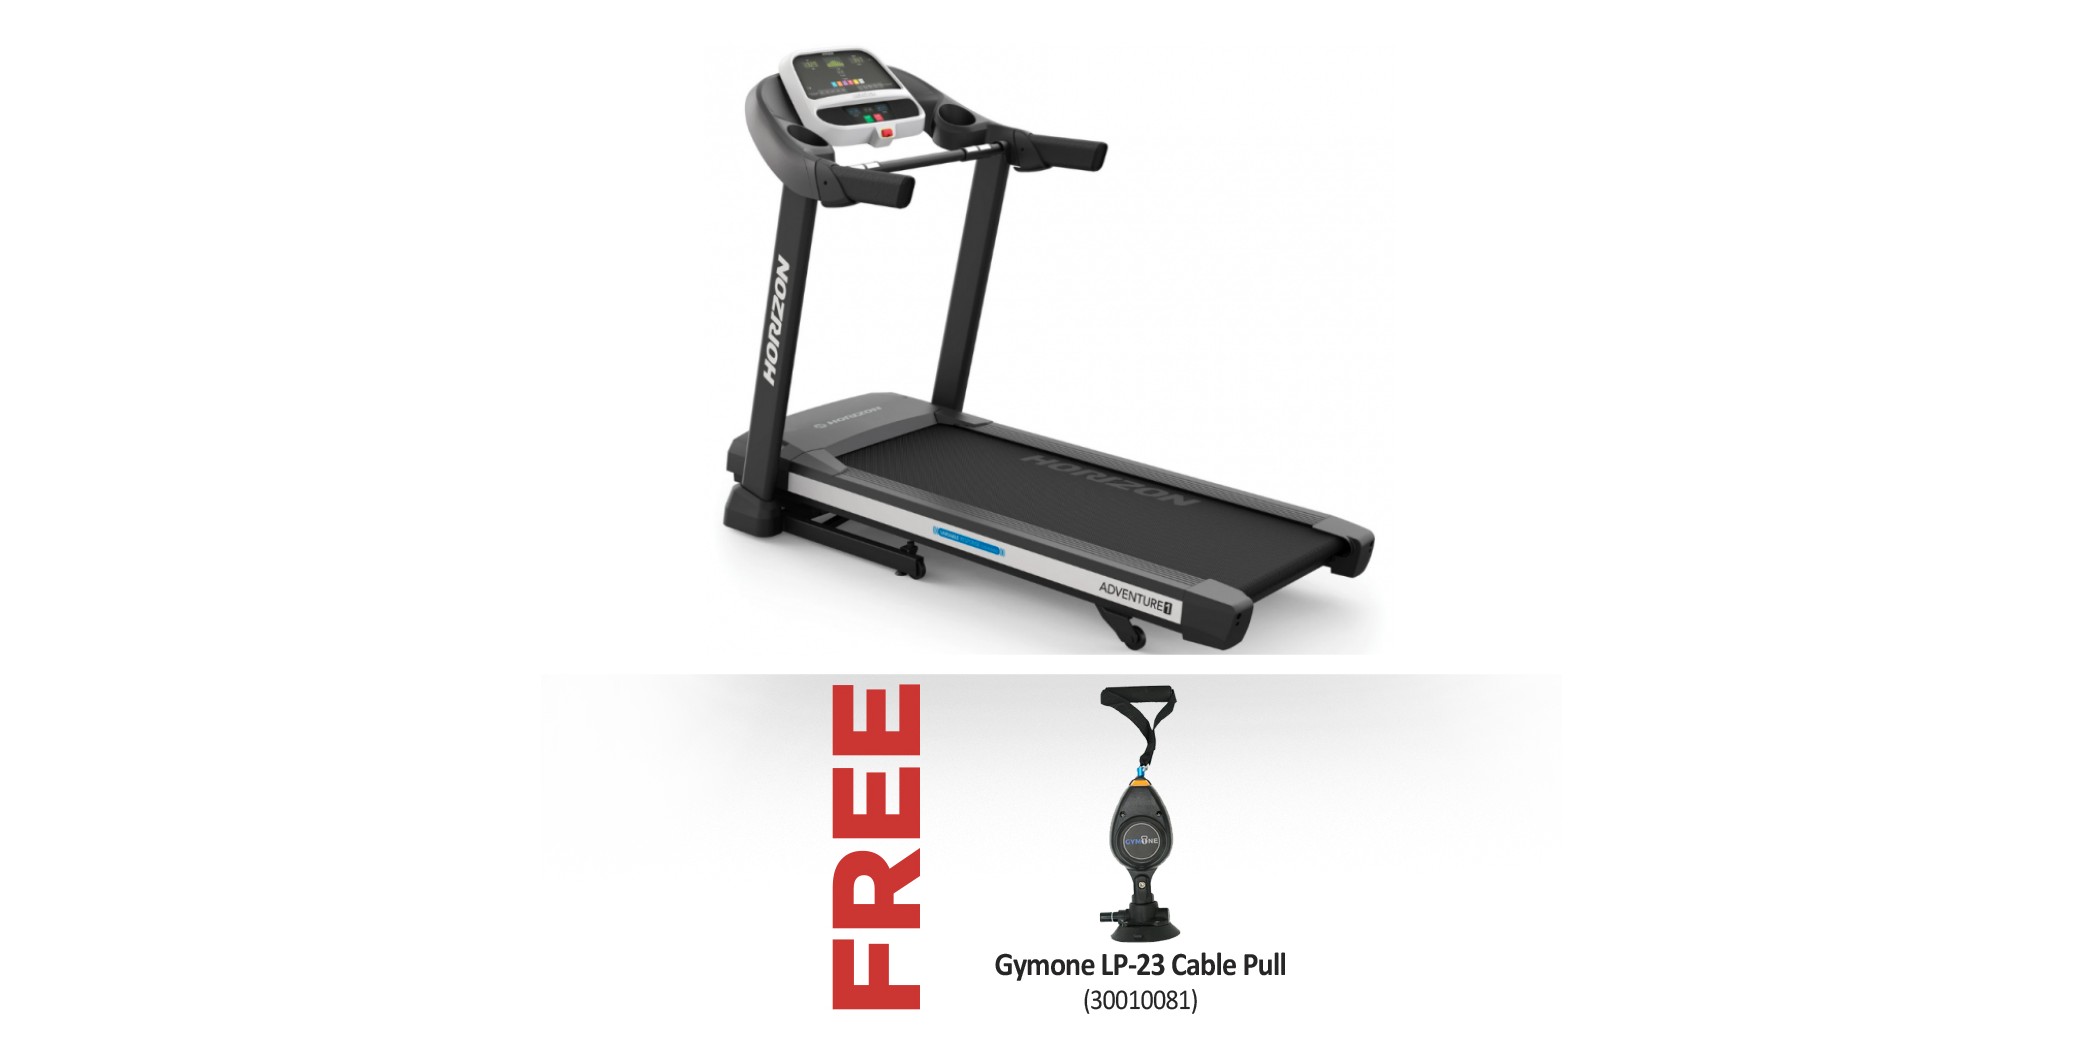 Horizon Adventure 1 Treadmill & Free Gymone LP-23 Cable Pull